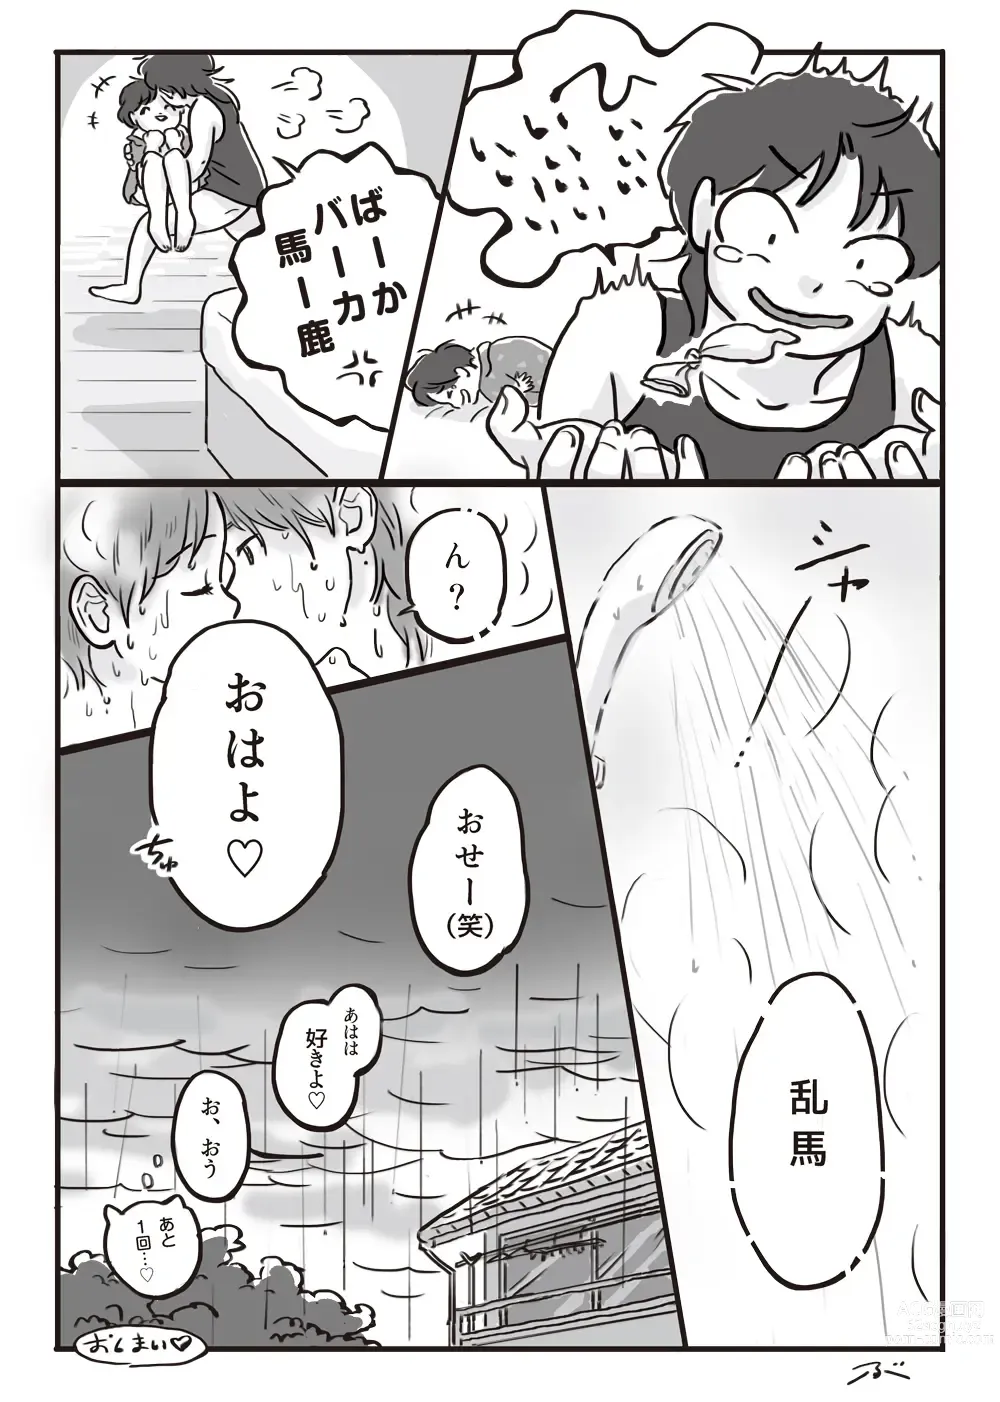 Page 53 of doujinshi Haiiro no Asa...